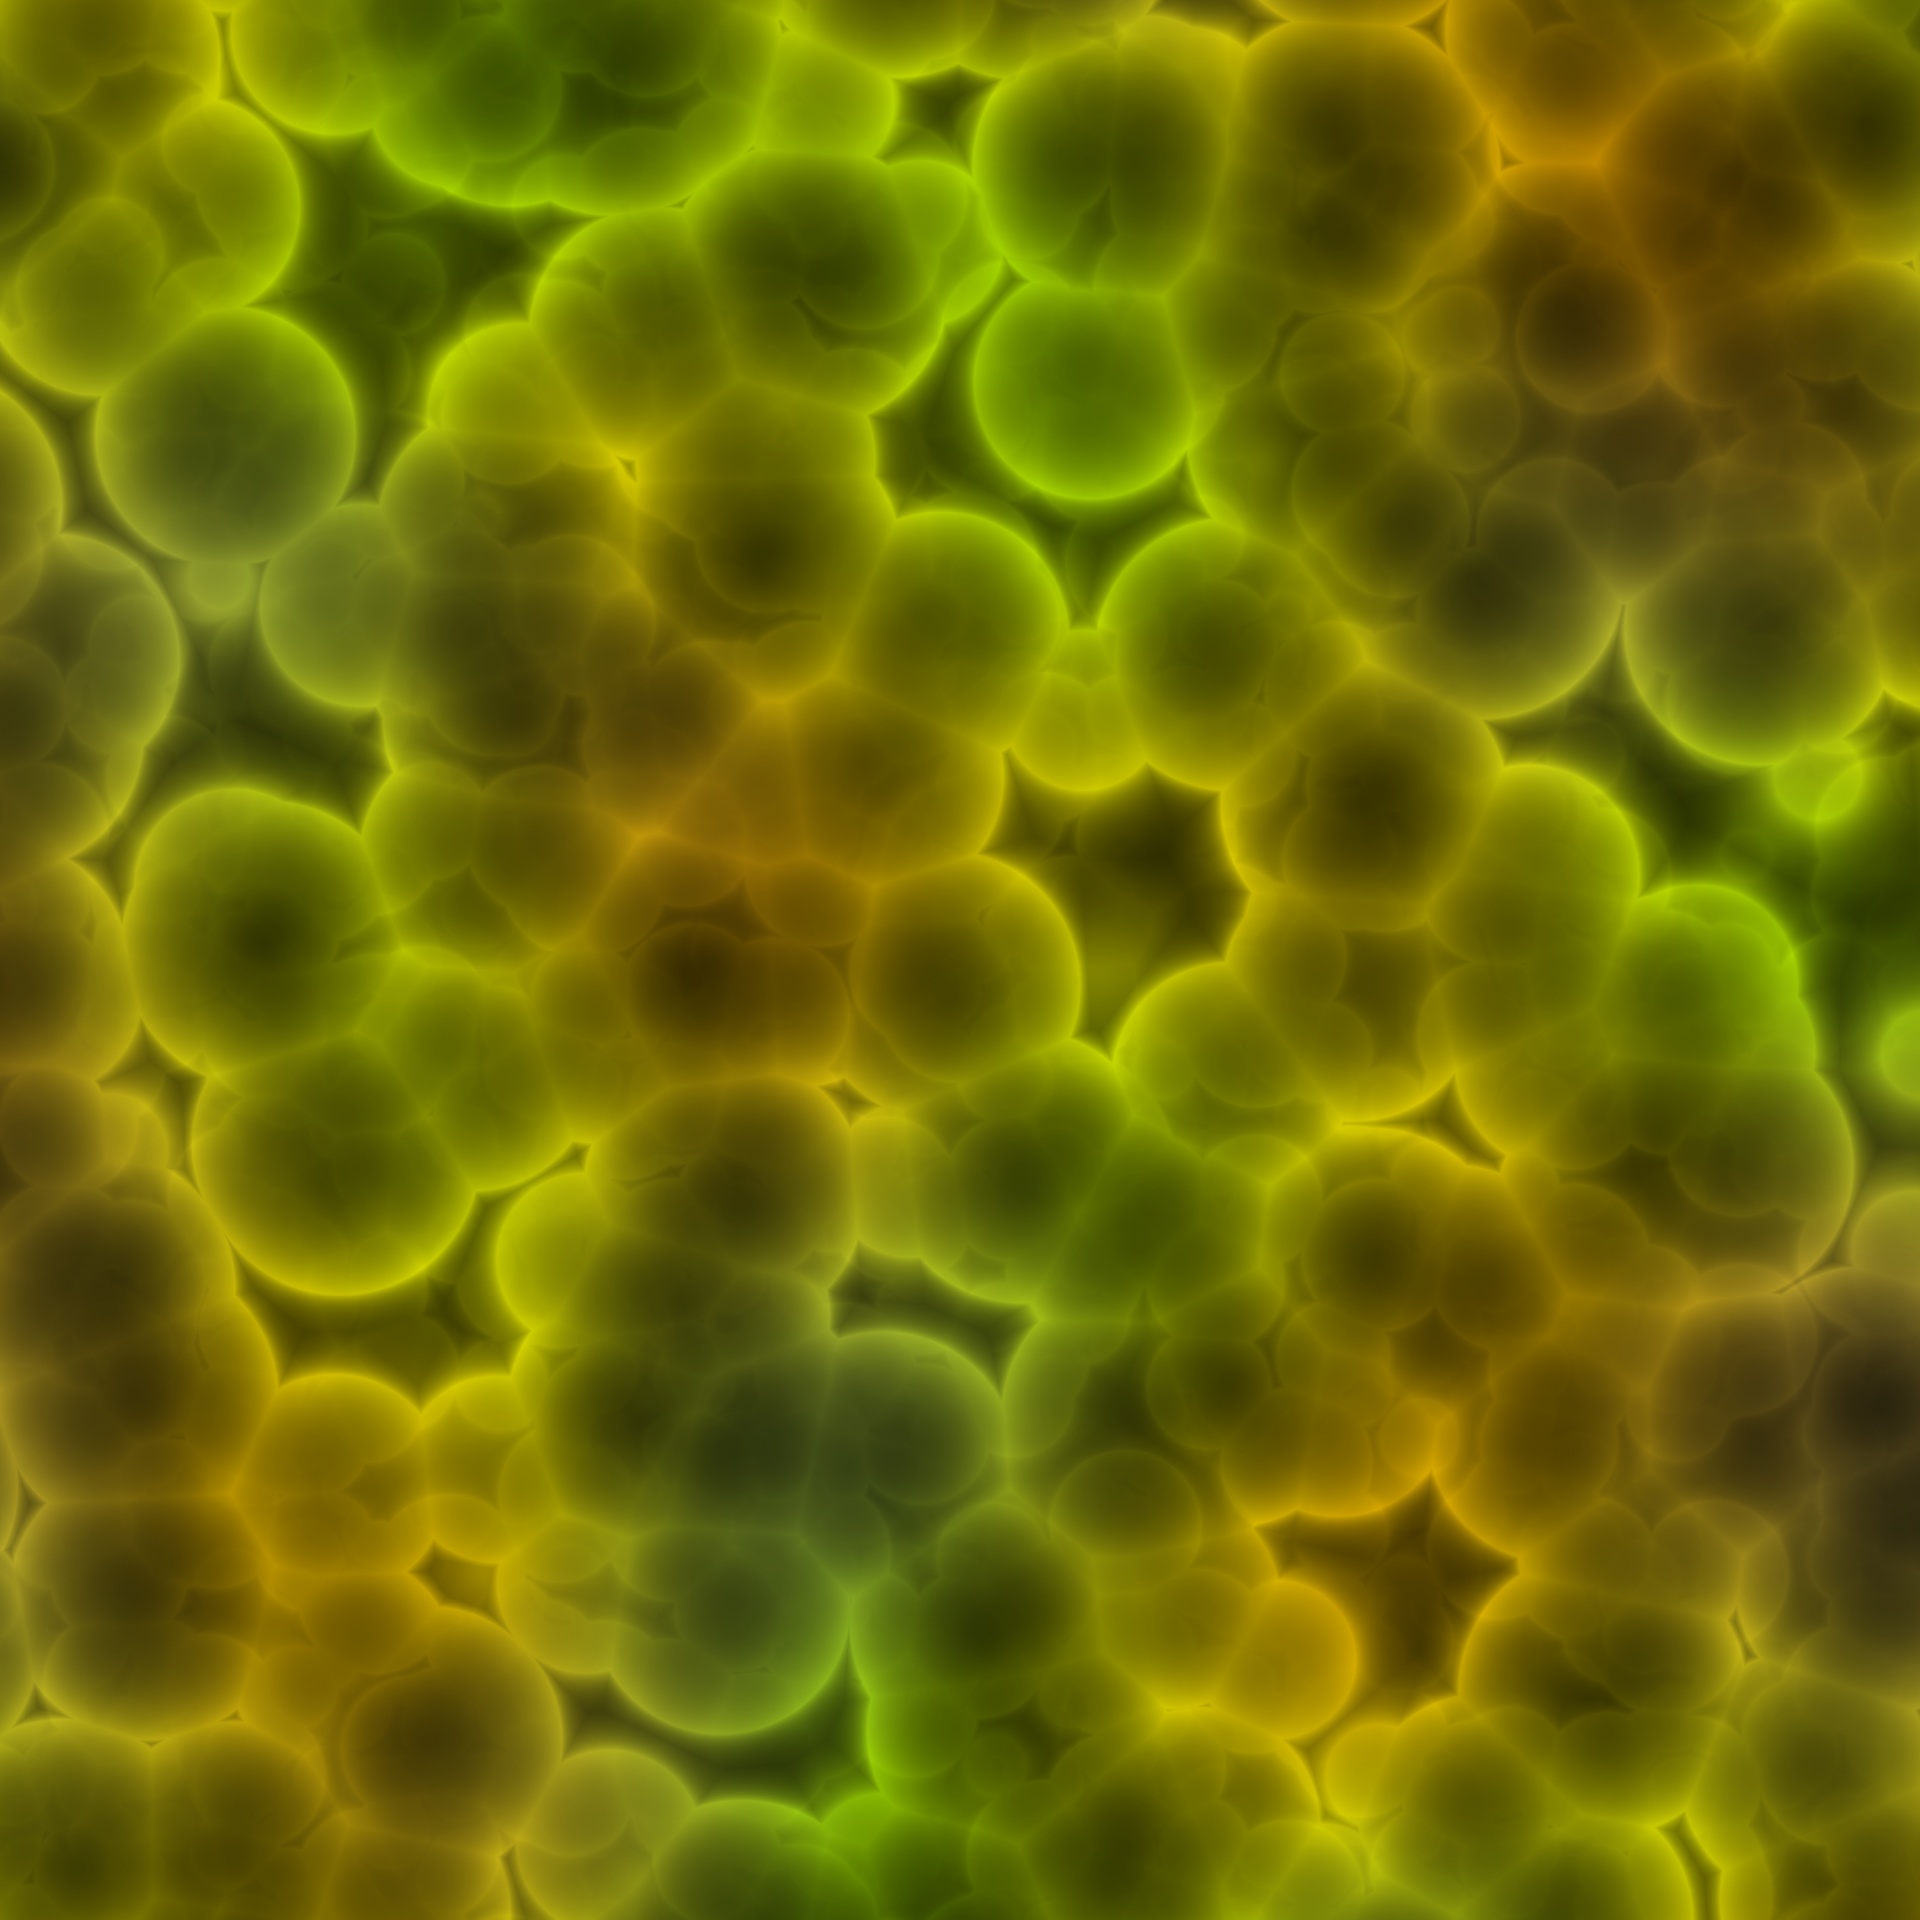 Bacterias amarillo